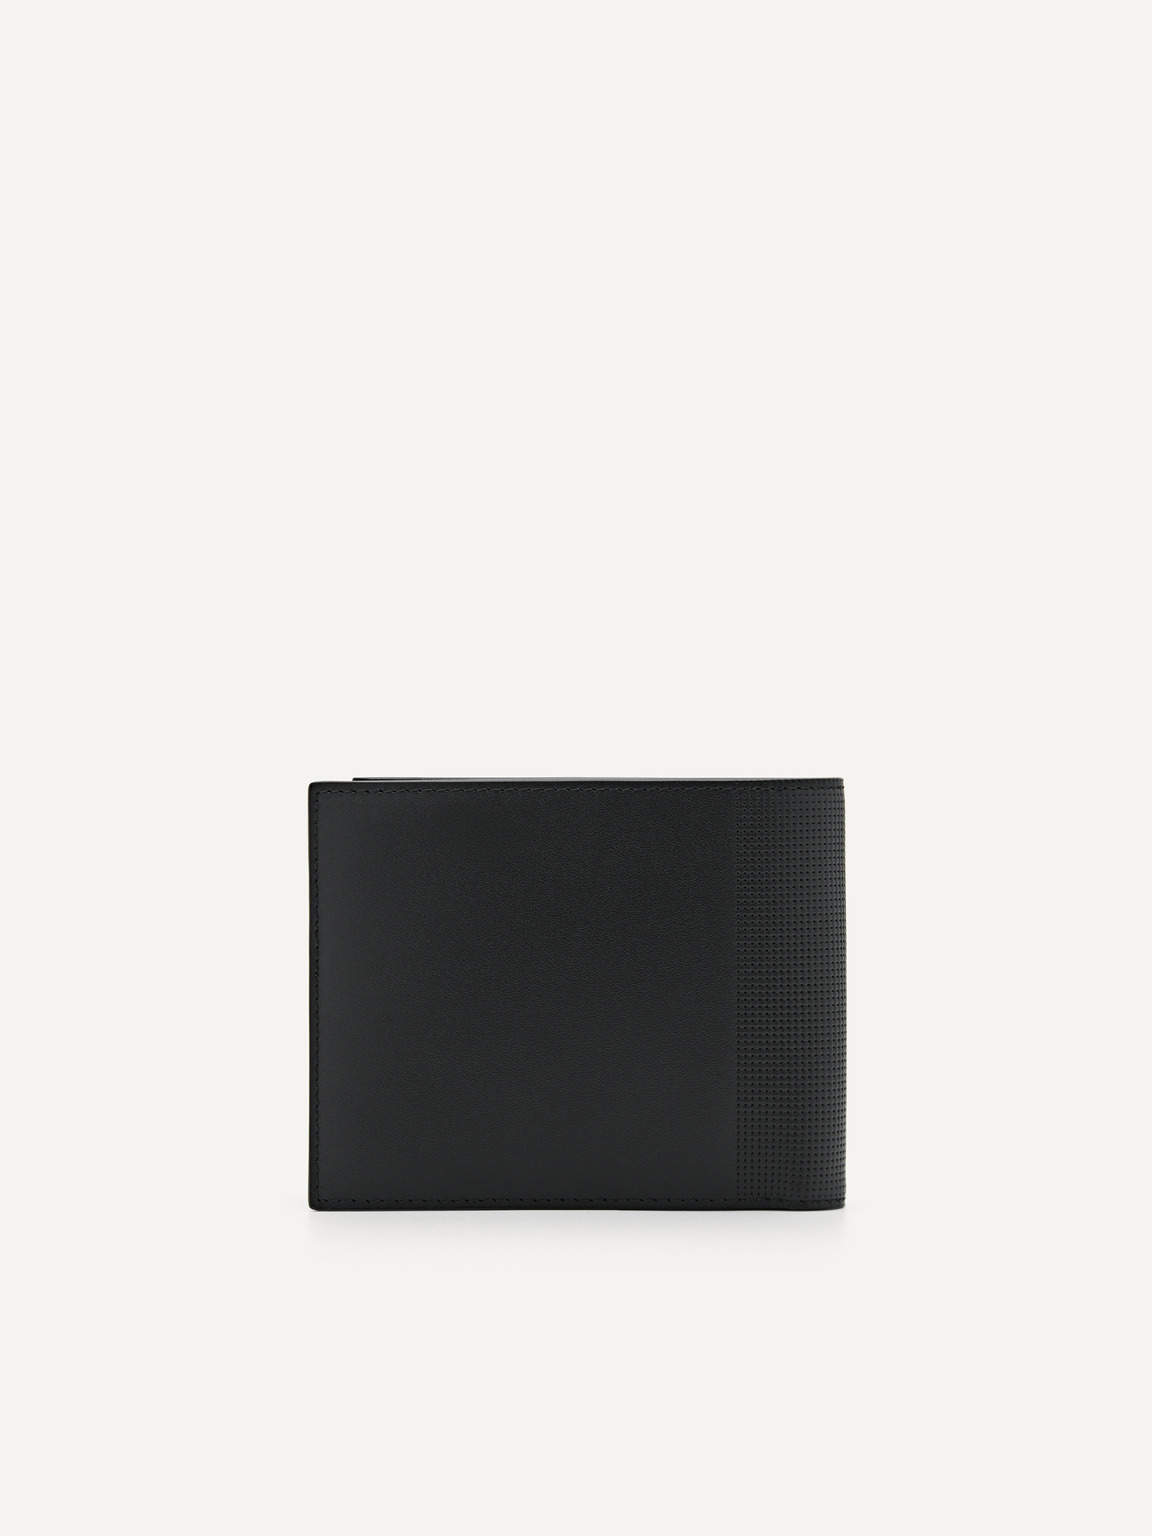 Oliver Leather Bi-Fold Wallet with Insert, Black